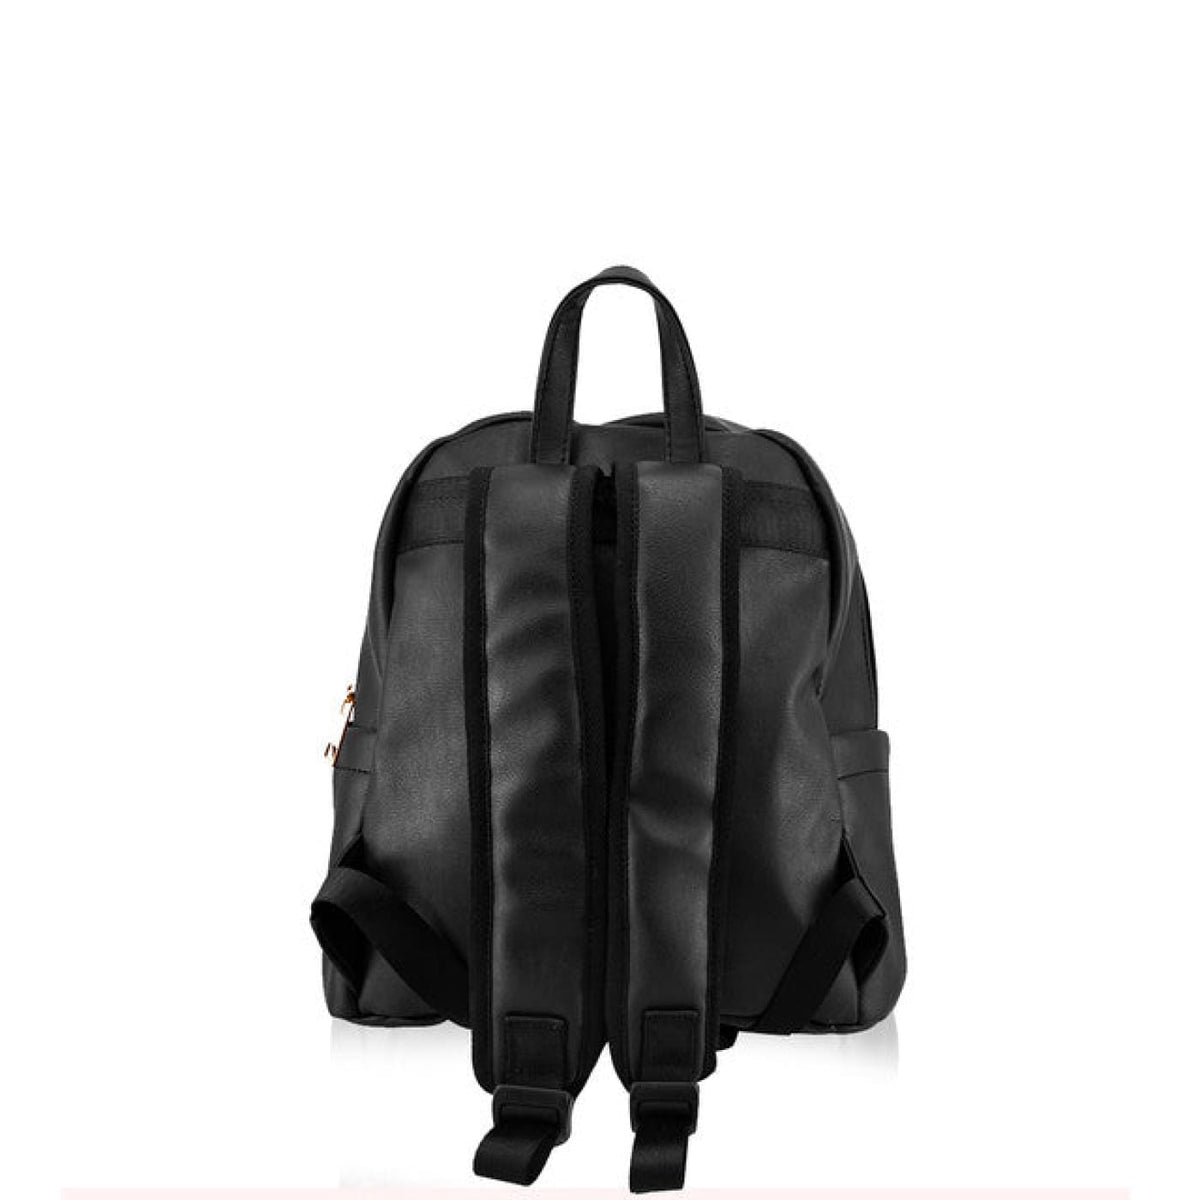 Isoki Mini Marlo Backpack Nappy Bag - Ebony - Ebony - ON THE GO - NAPPY BAGS/LUGGAGE